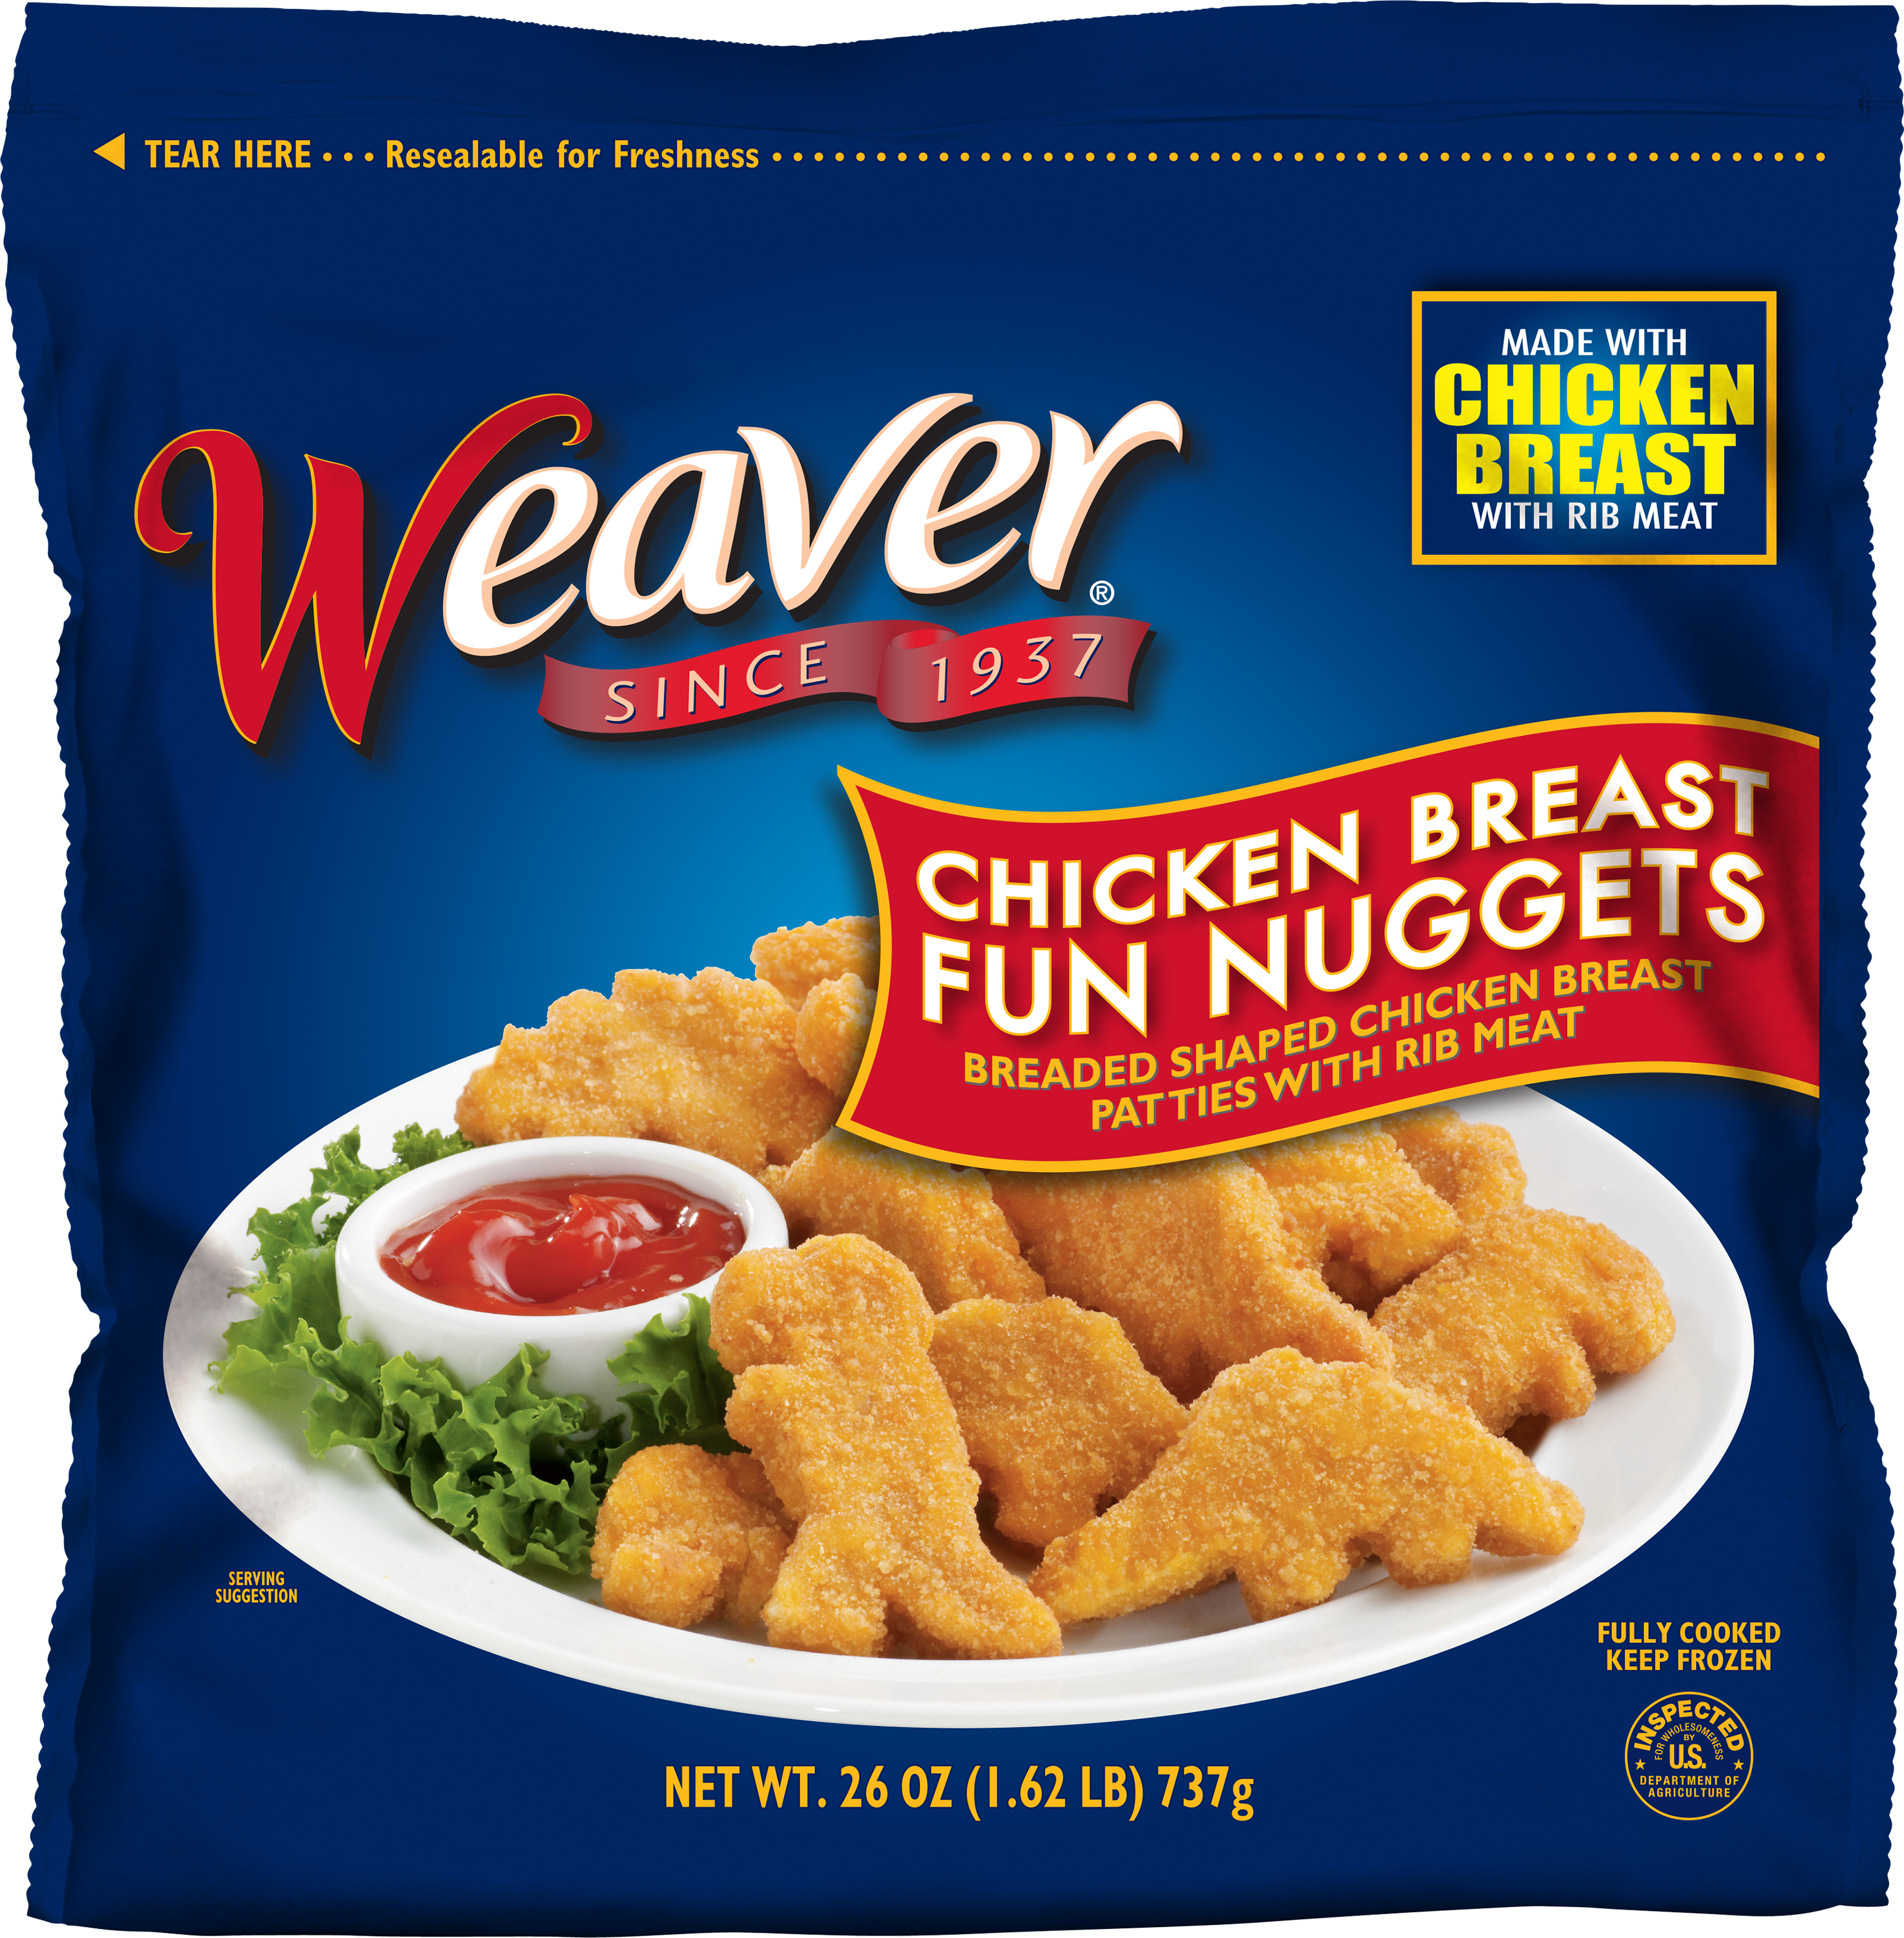 Chicken Breast Fun Nuggets